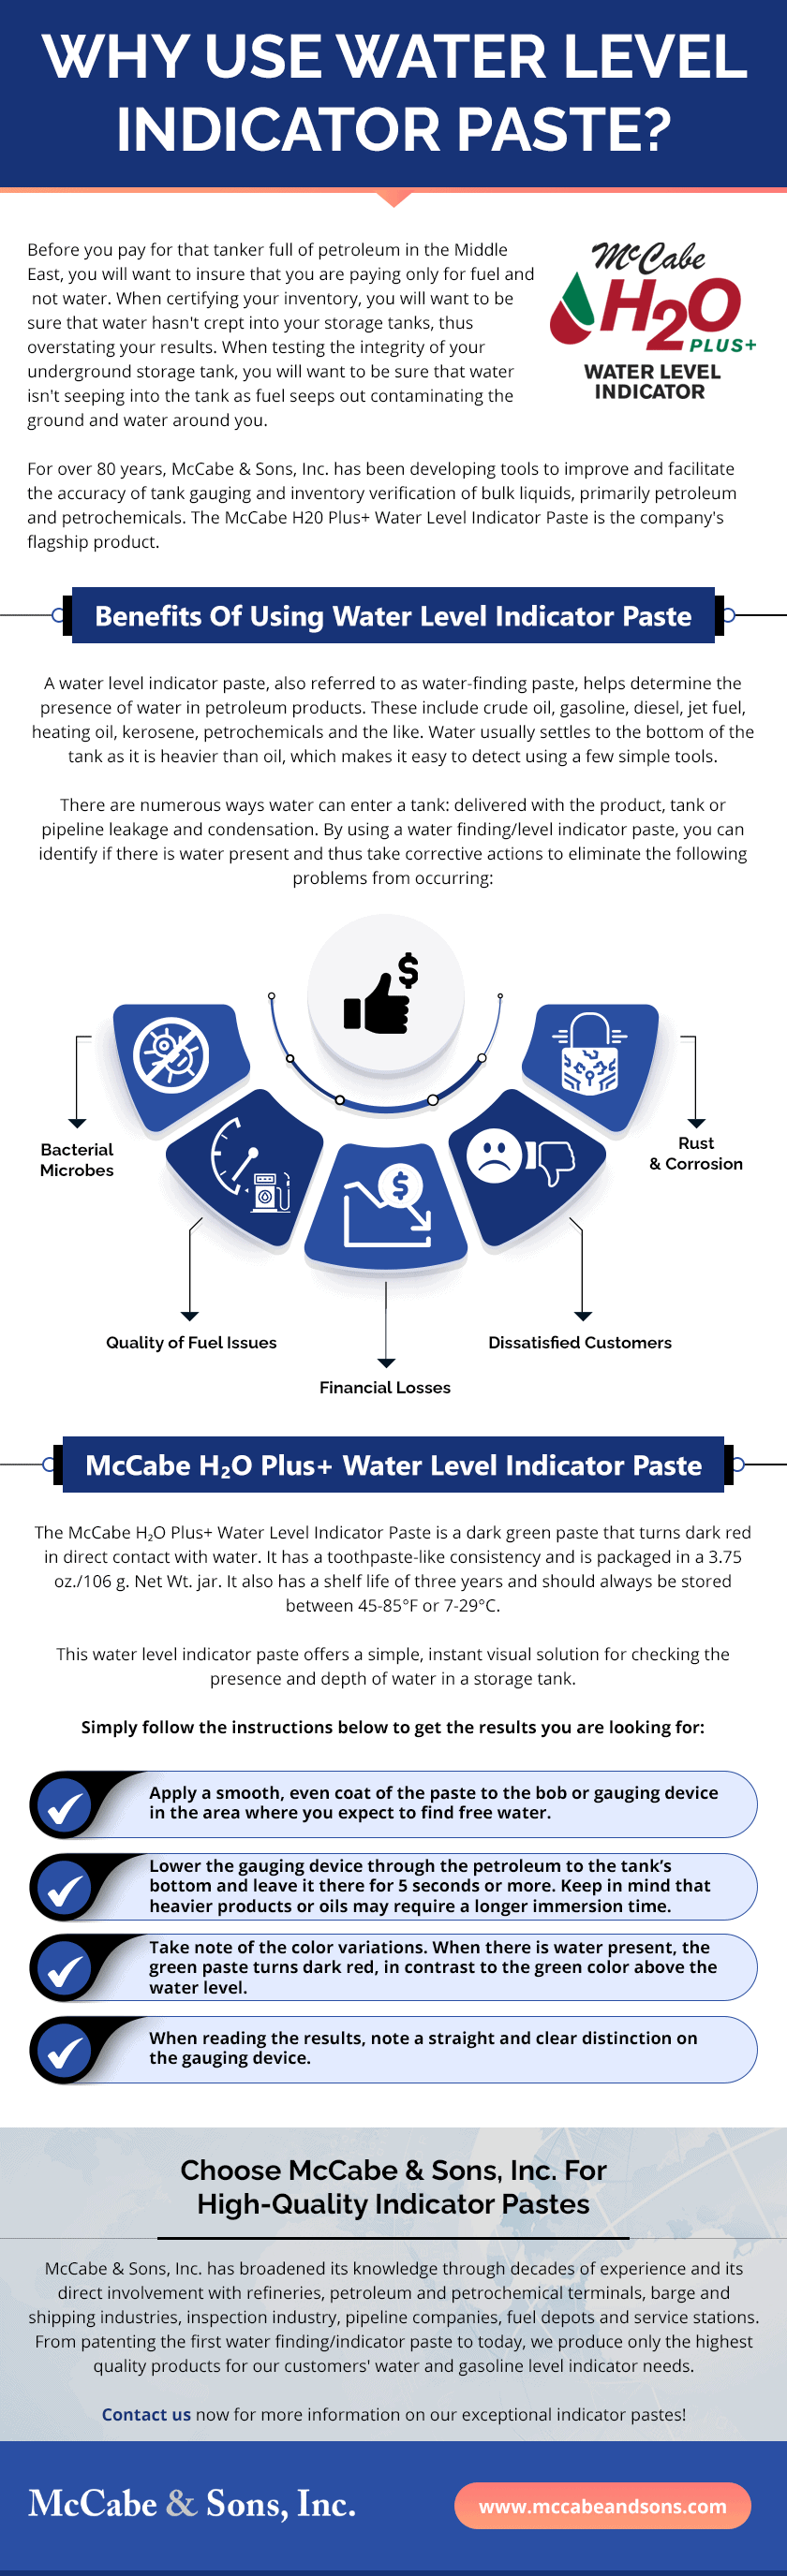 Why Use Water Level Indicator Paste